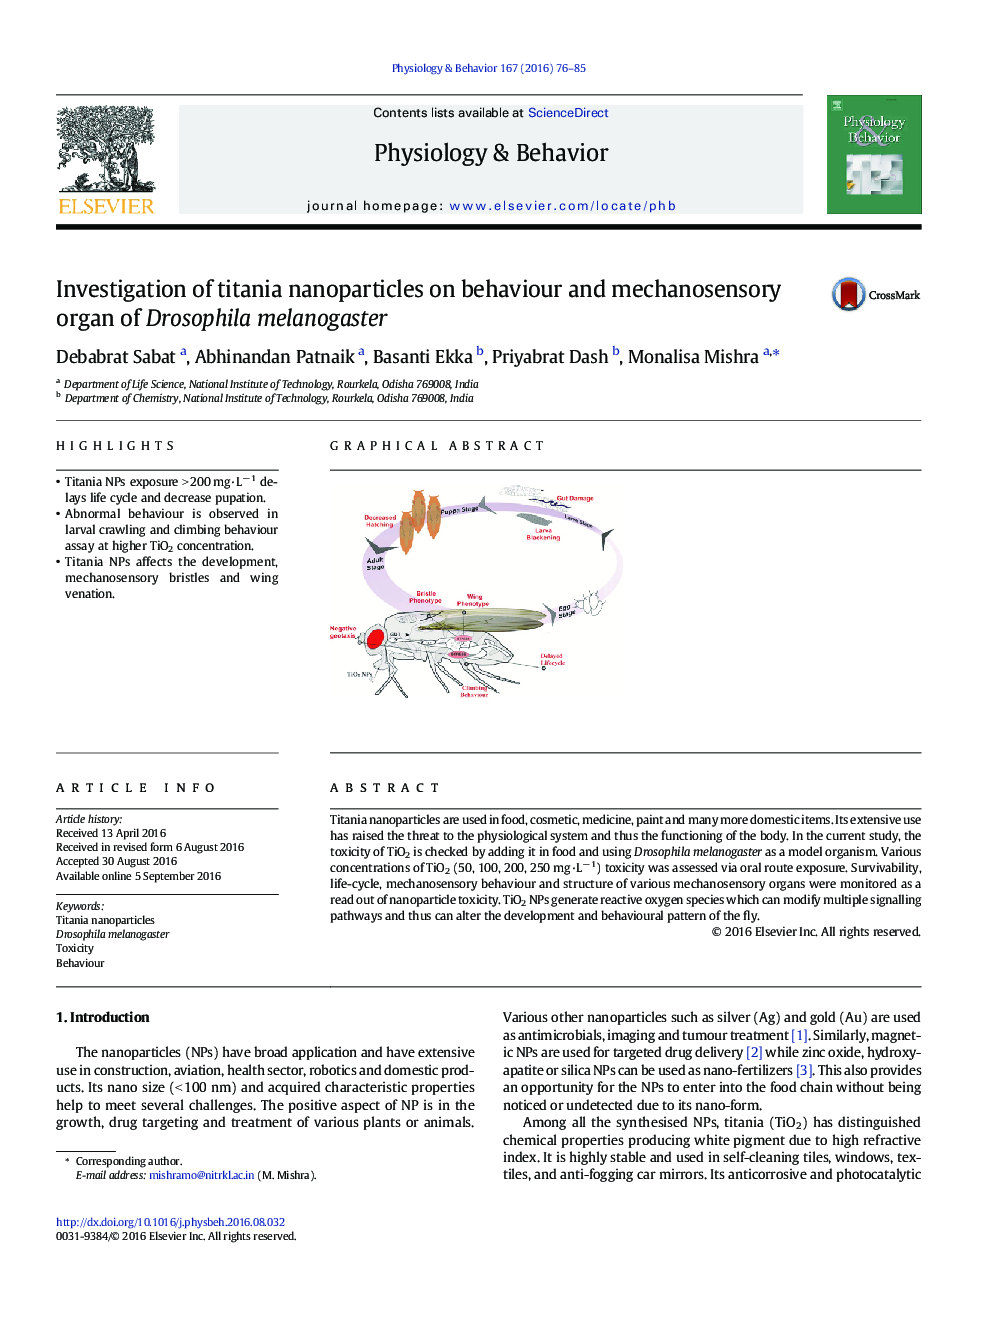 Investigation of titania nanoparticles on behaviour and mechanosensory organ of Drosophila melanogaster